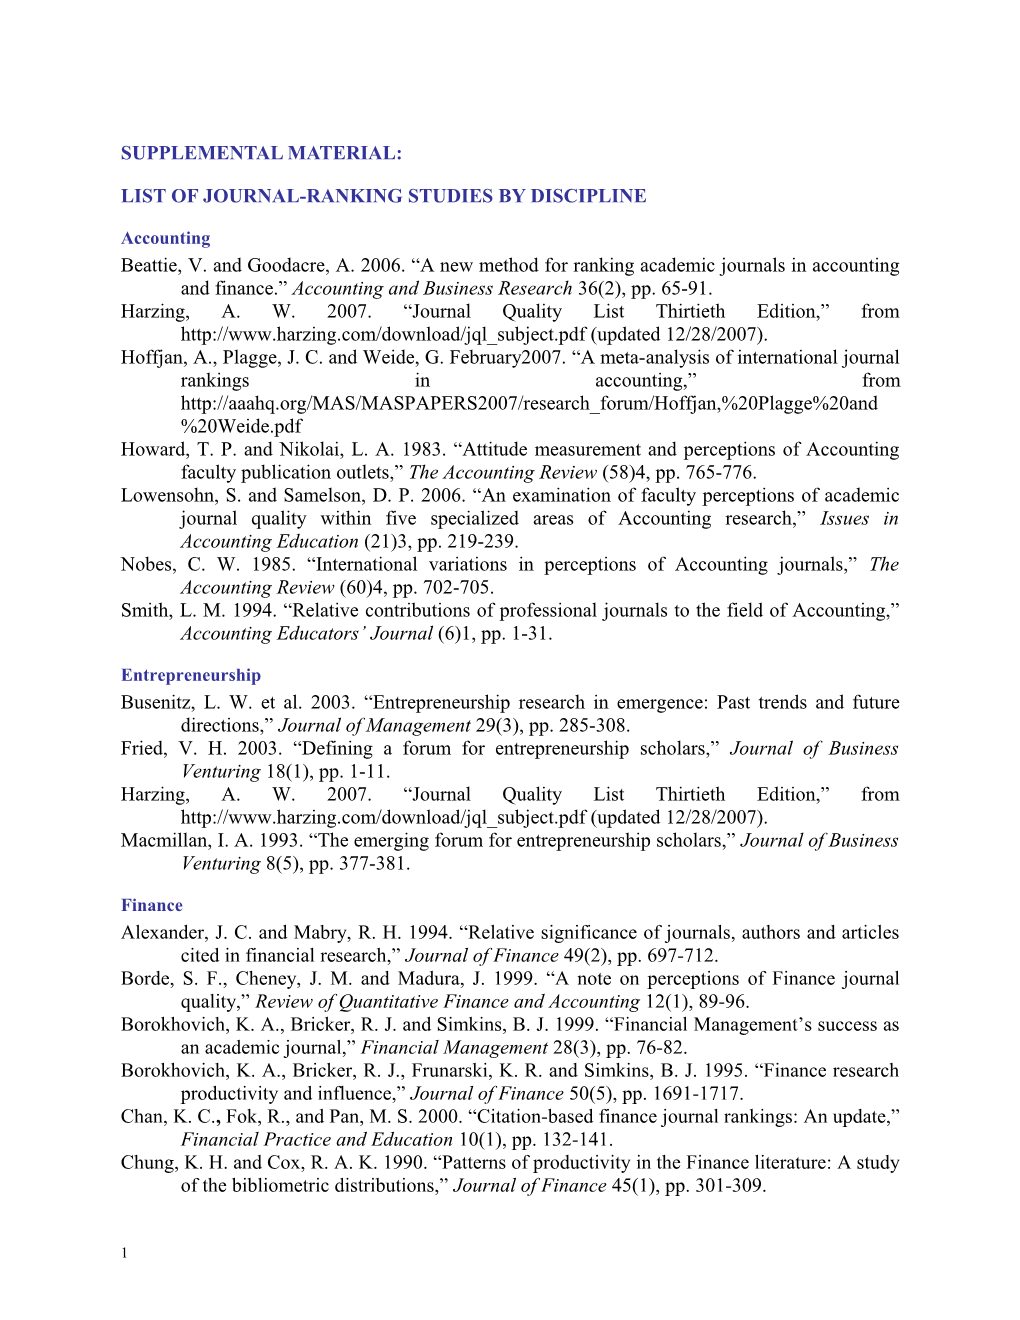 List of Journal-RANKING Studies by Discipline